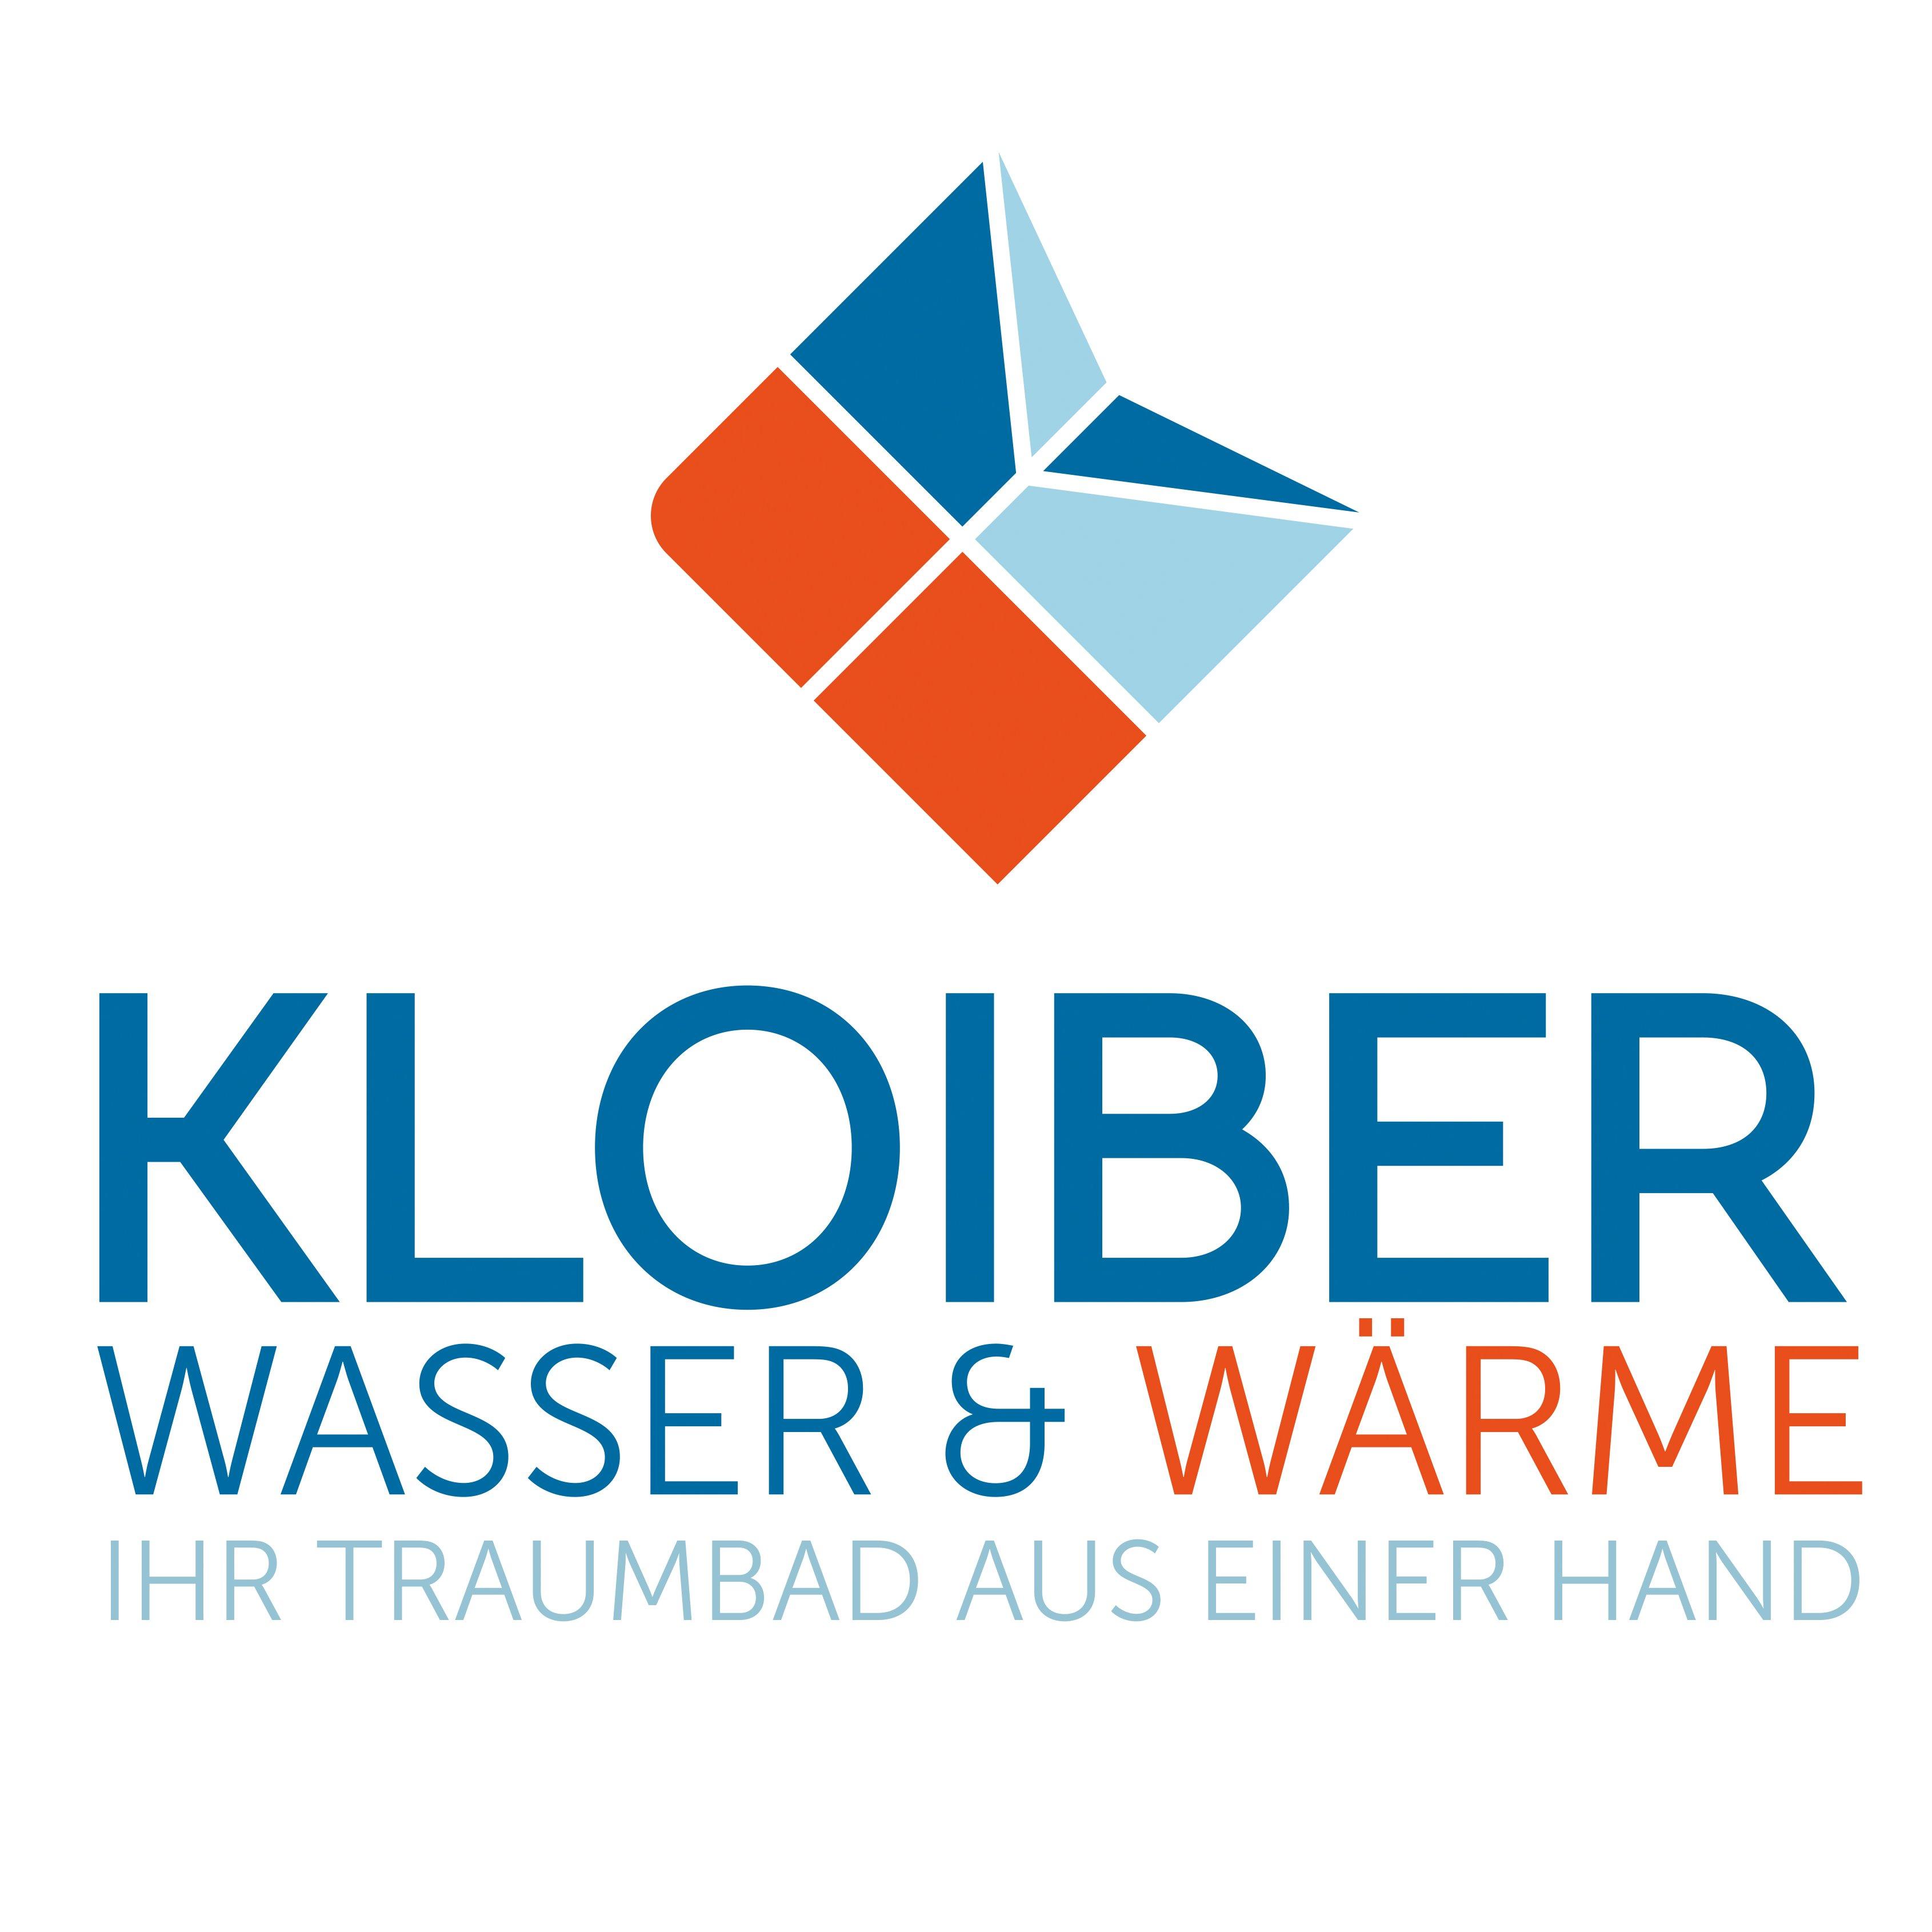 Franz Kloiber GmbH & Co KG